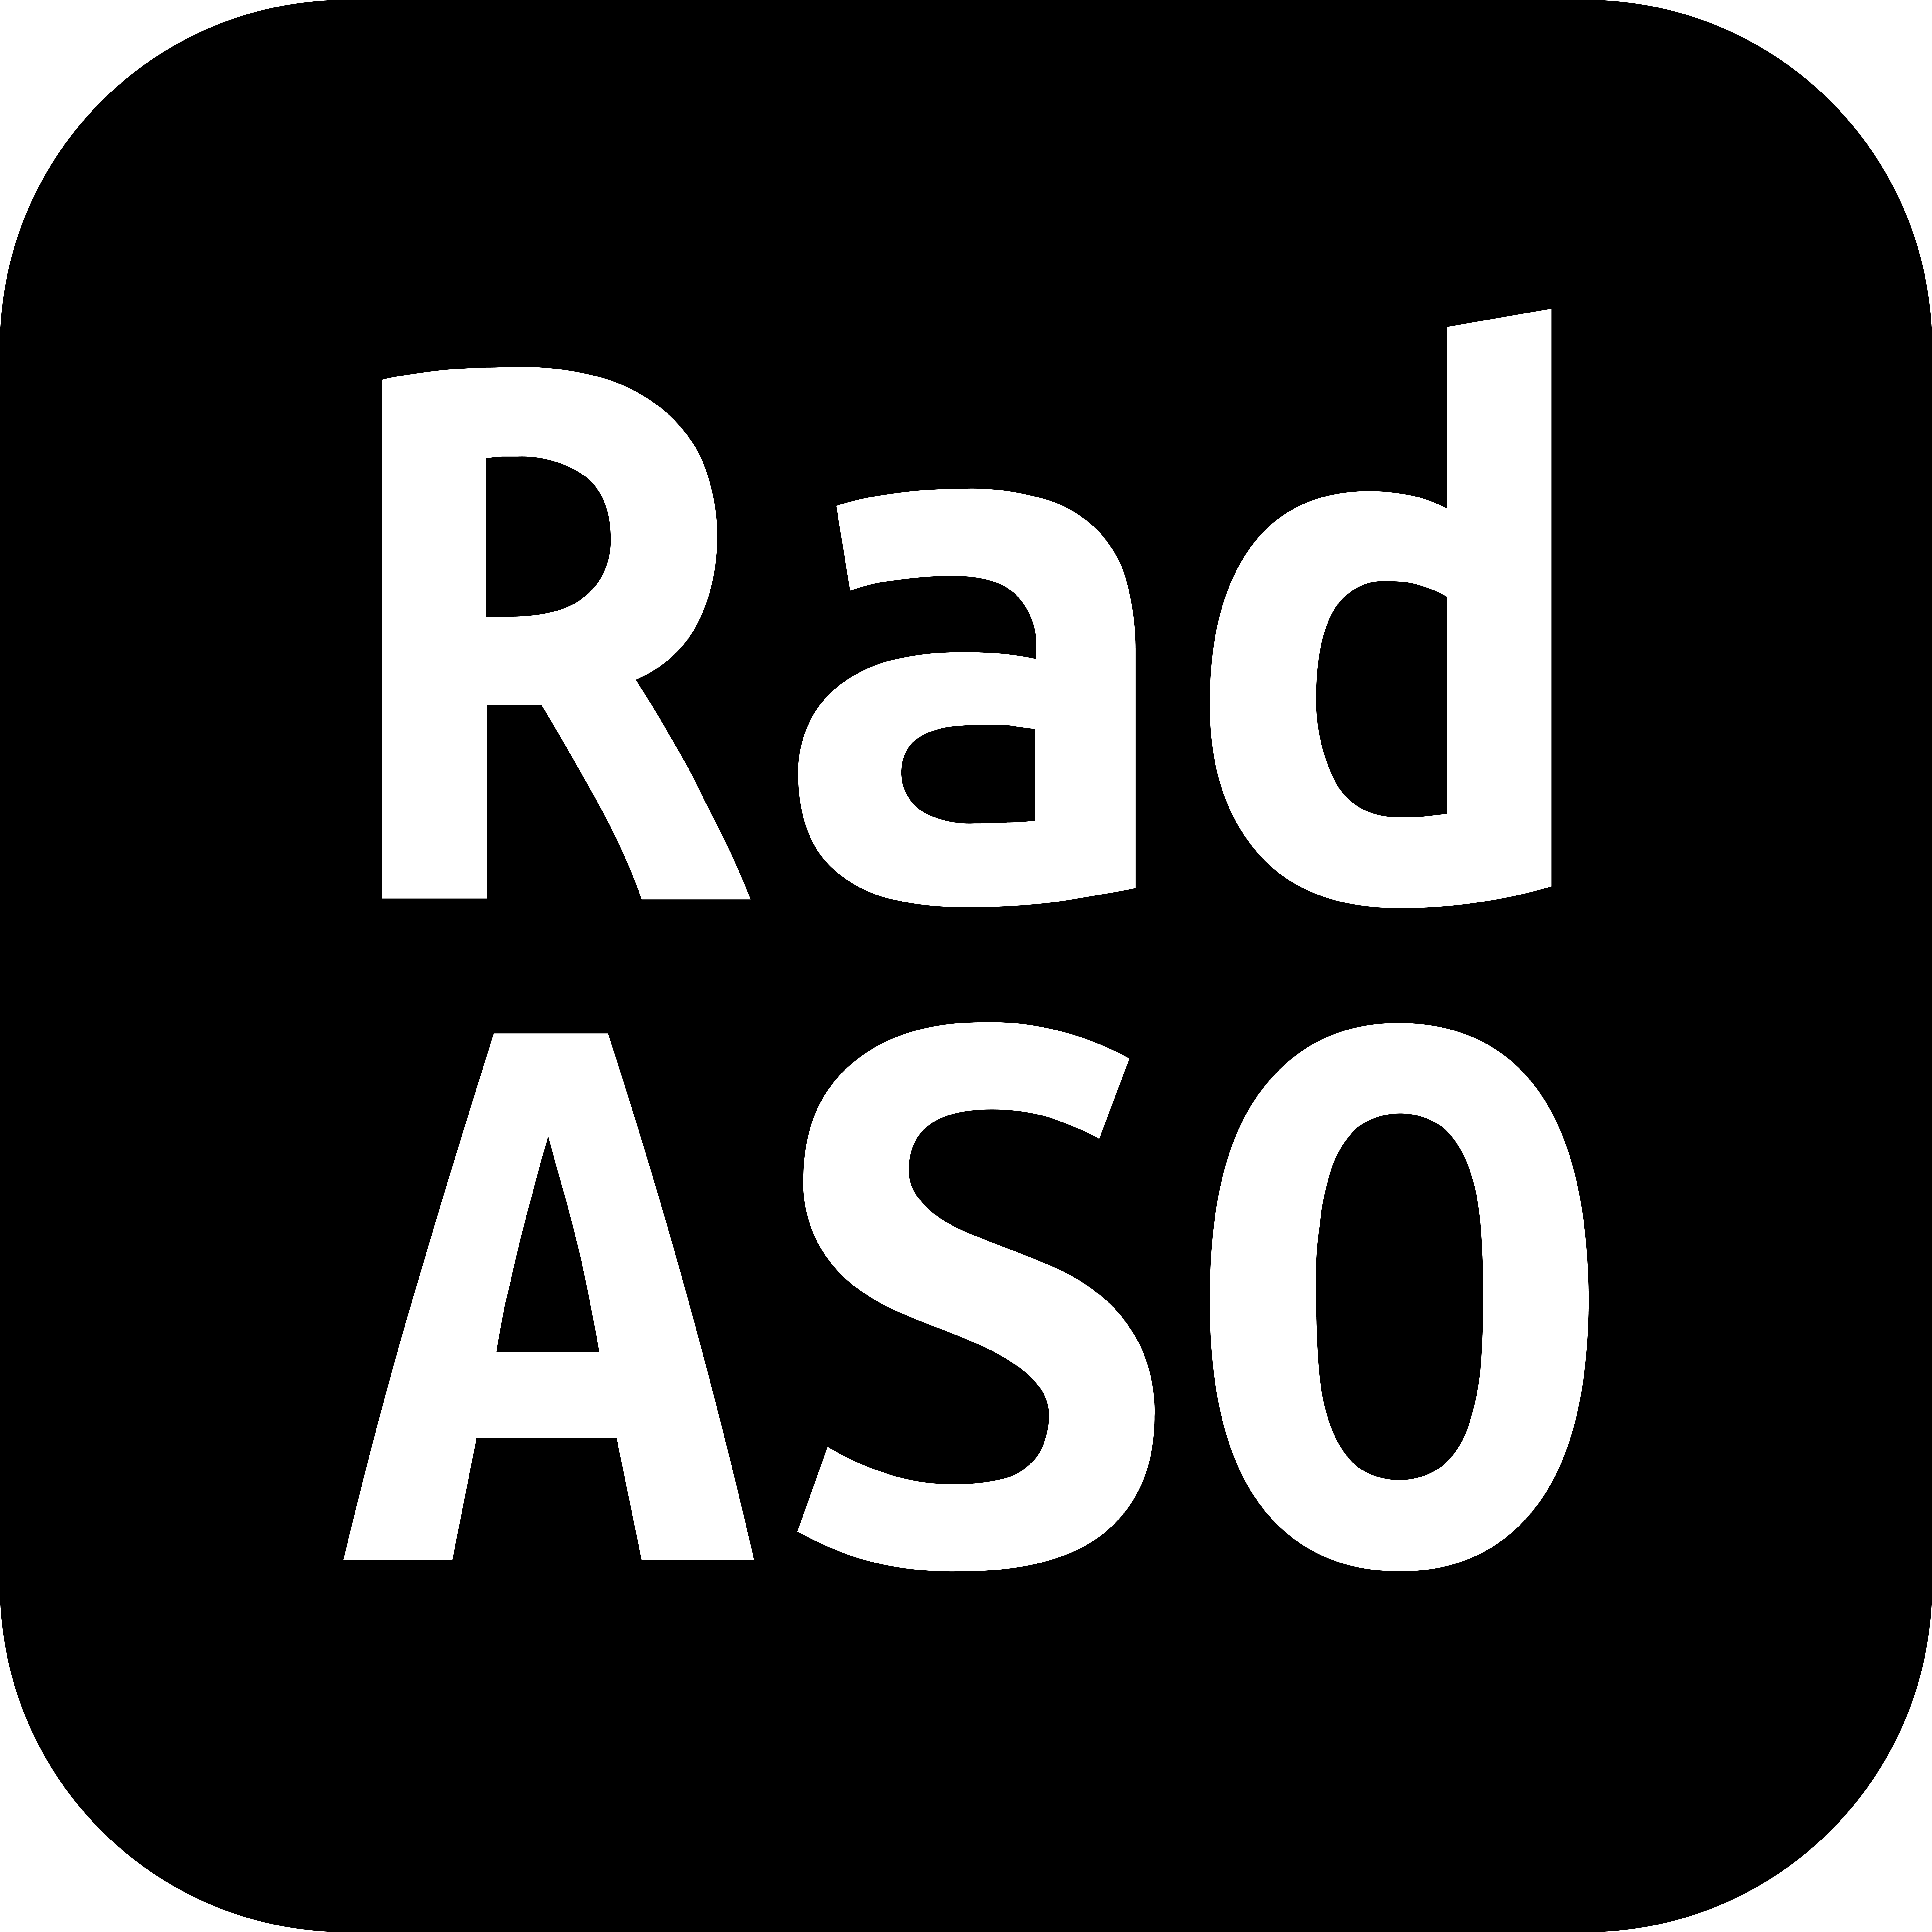 radaso logo white black bg